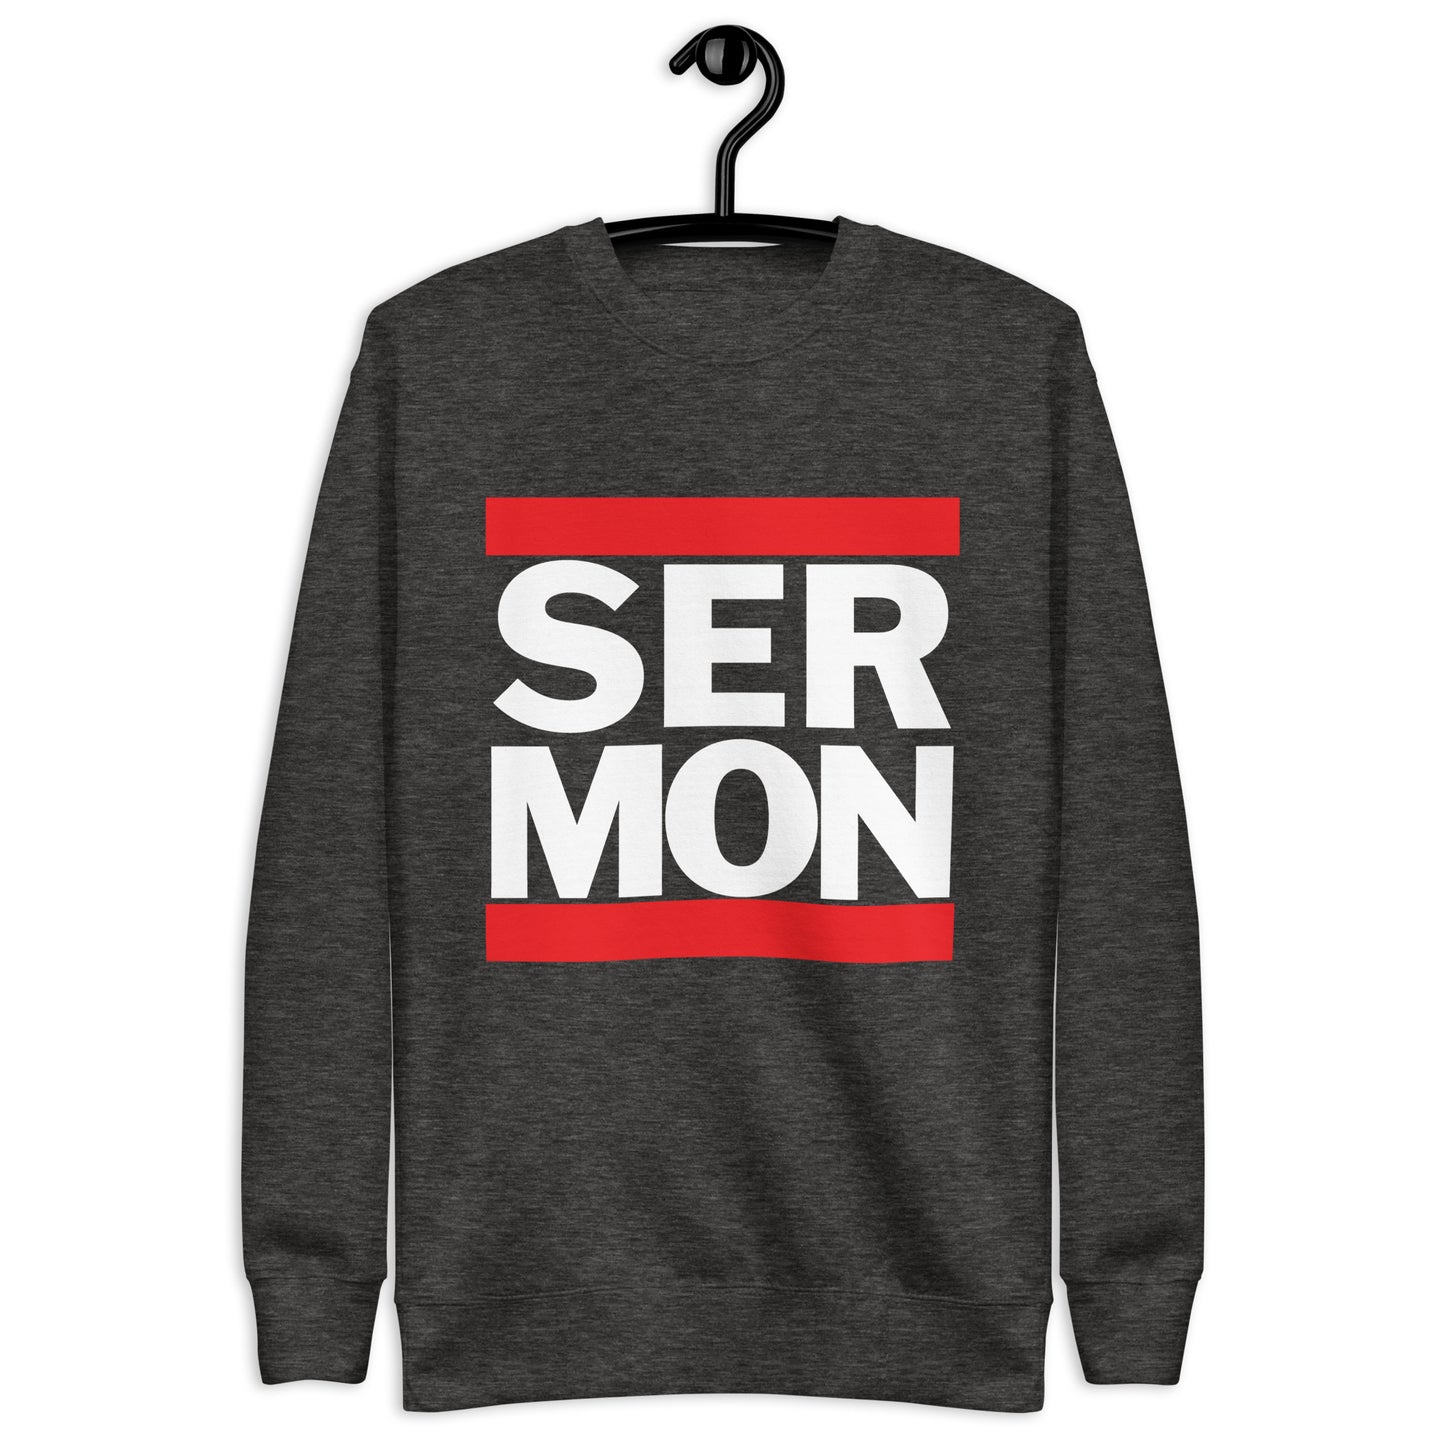 The SEMON Unisex Sweatshirt